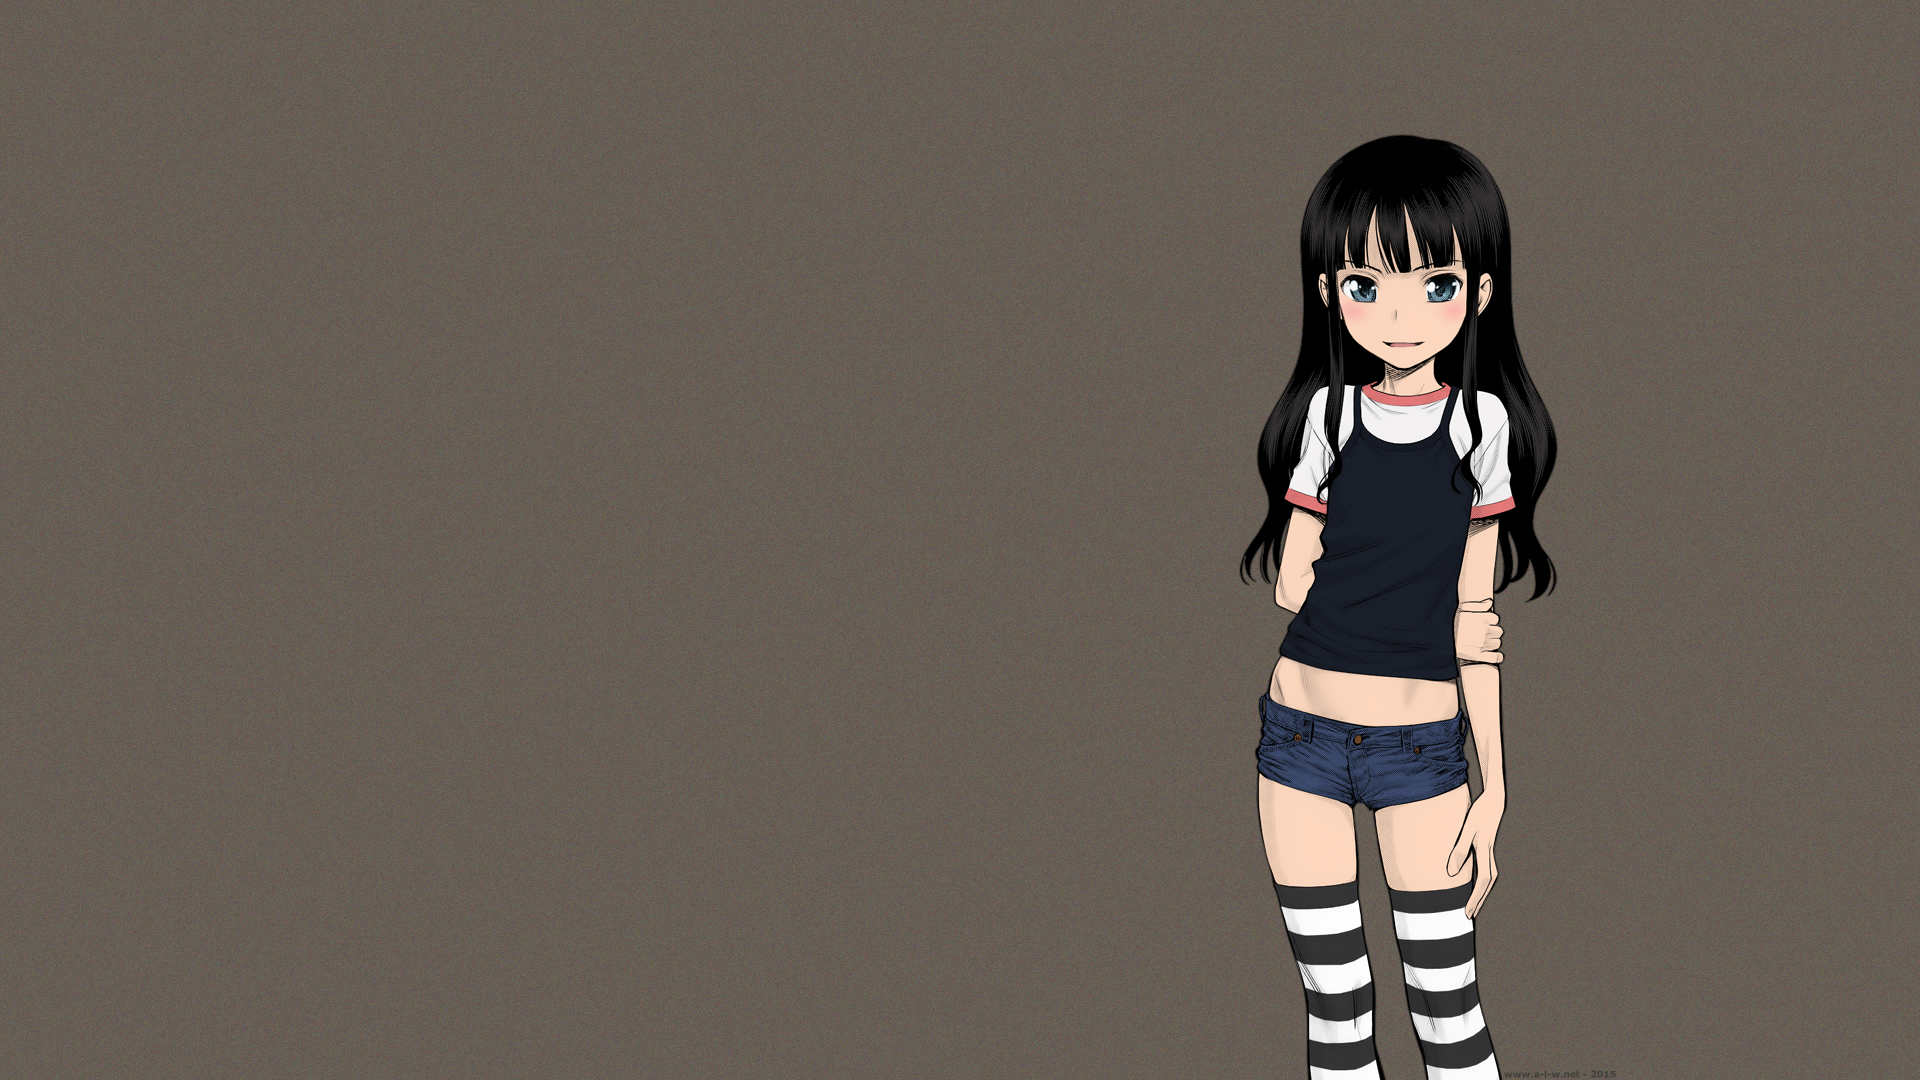 Anime 1920x1080 anime anime girls manga jean shorts stockings long hair dark hair blue eyes simple background striped stockings black hair